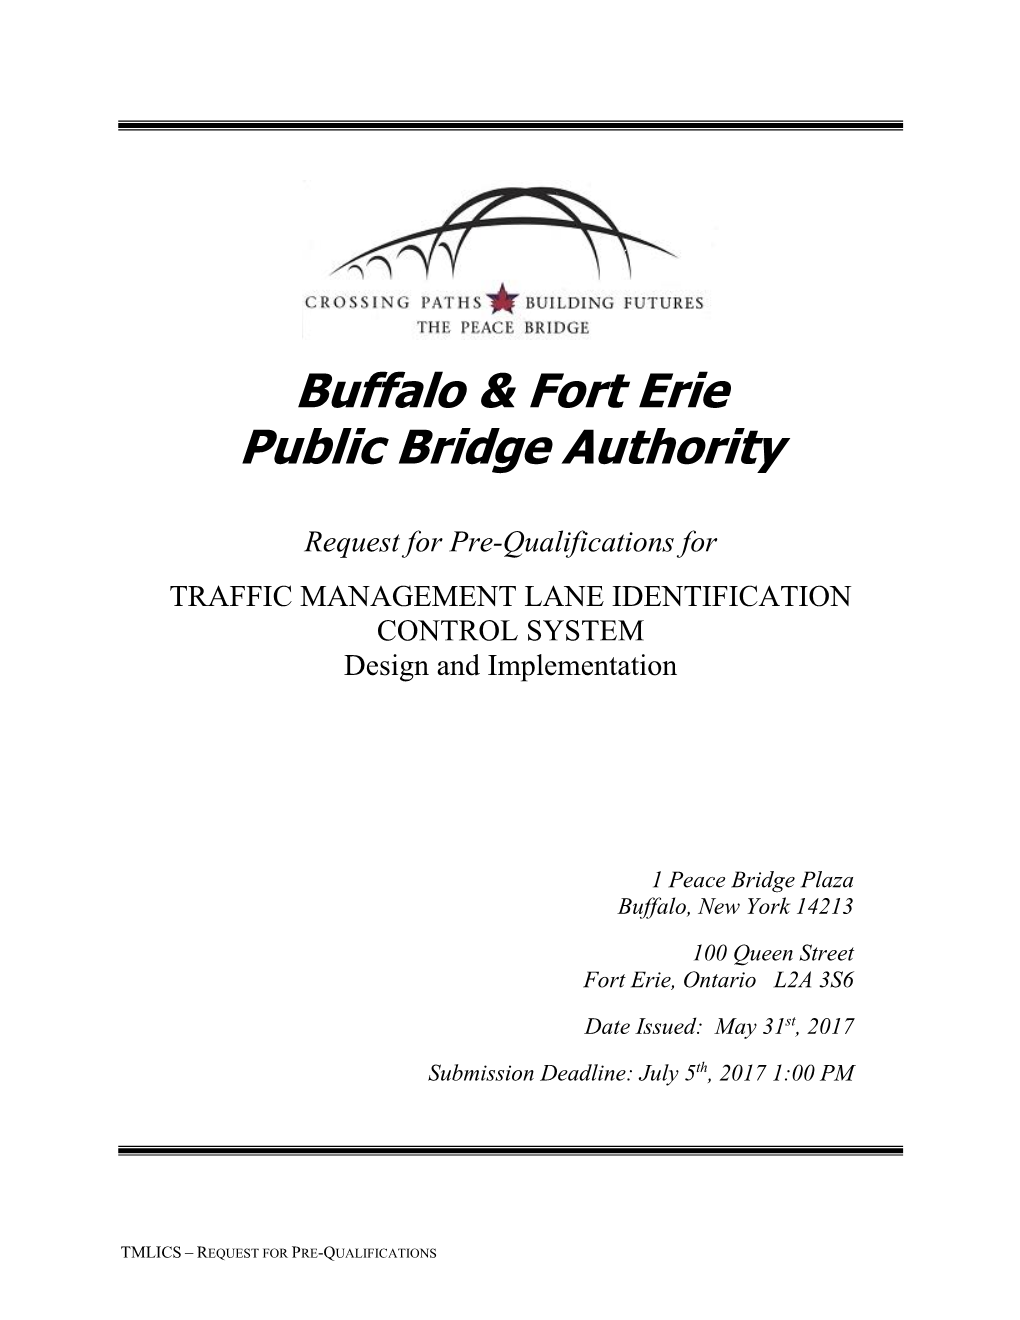 Buffalo & Fort Erie Public Bridge Authority